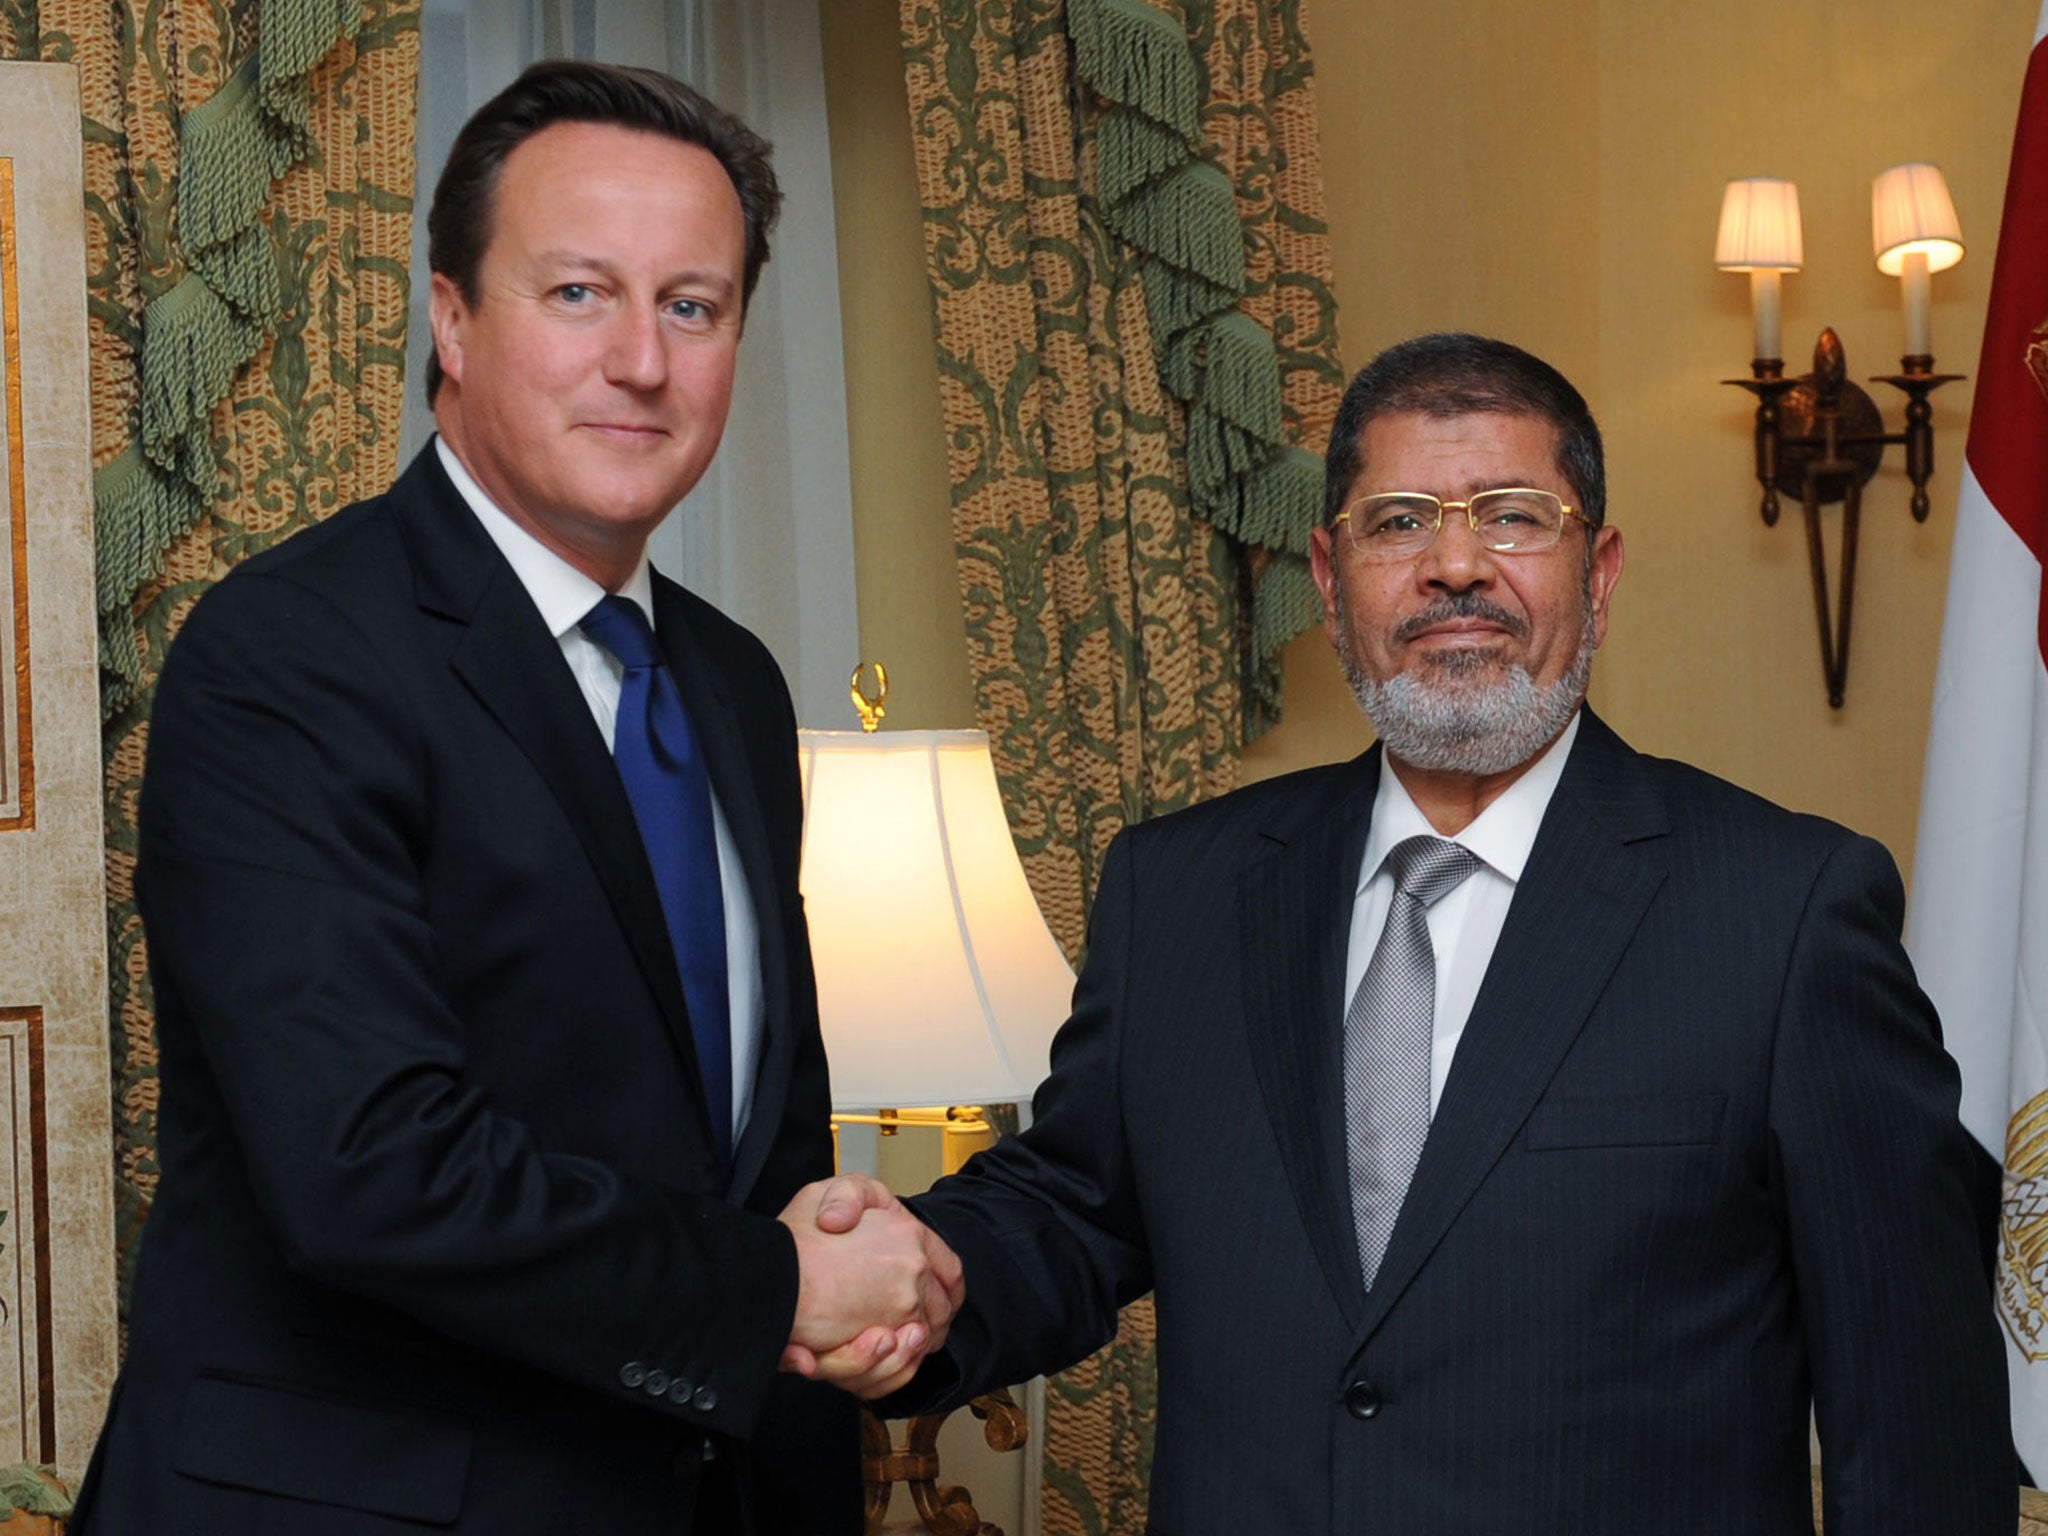 David Cameron with former Egyptian President Mohammed Morsi in 2012